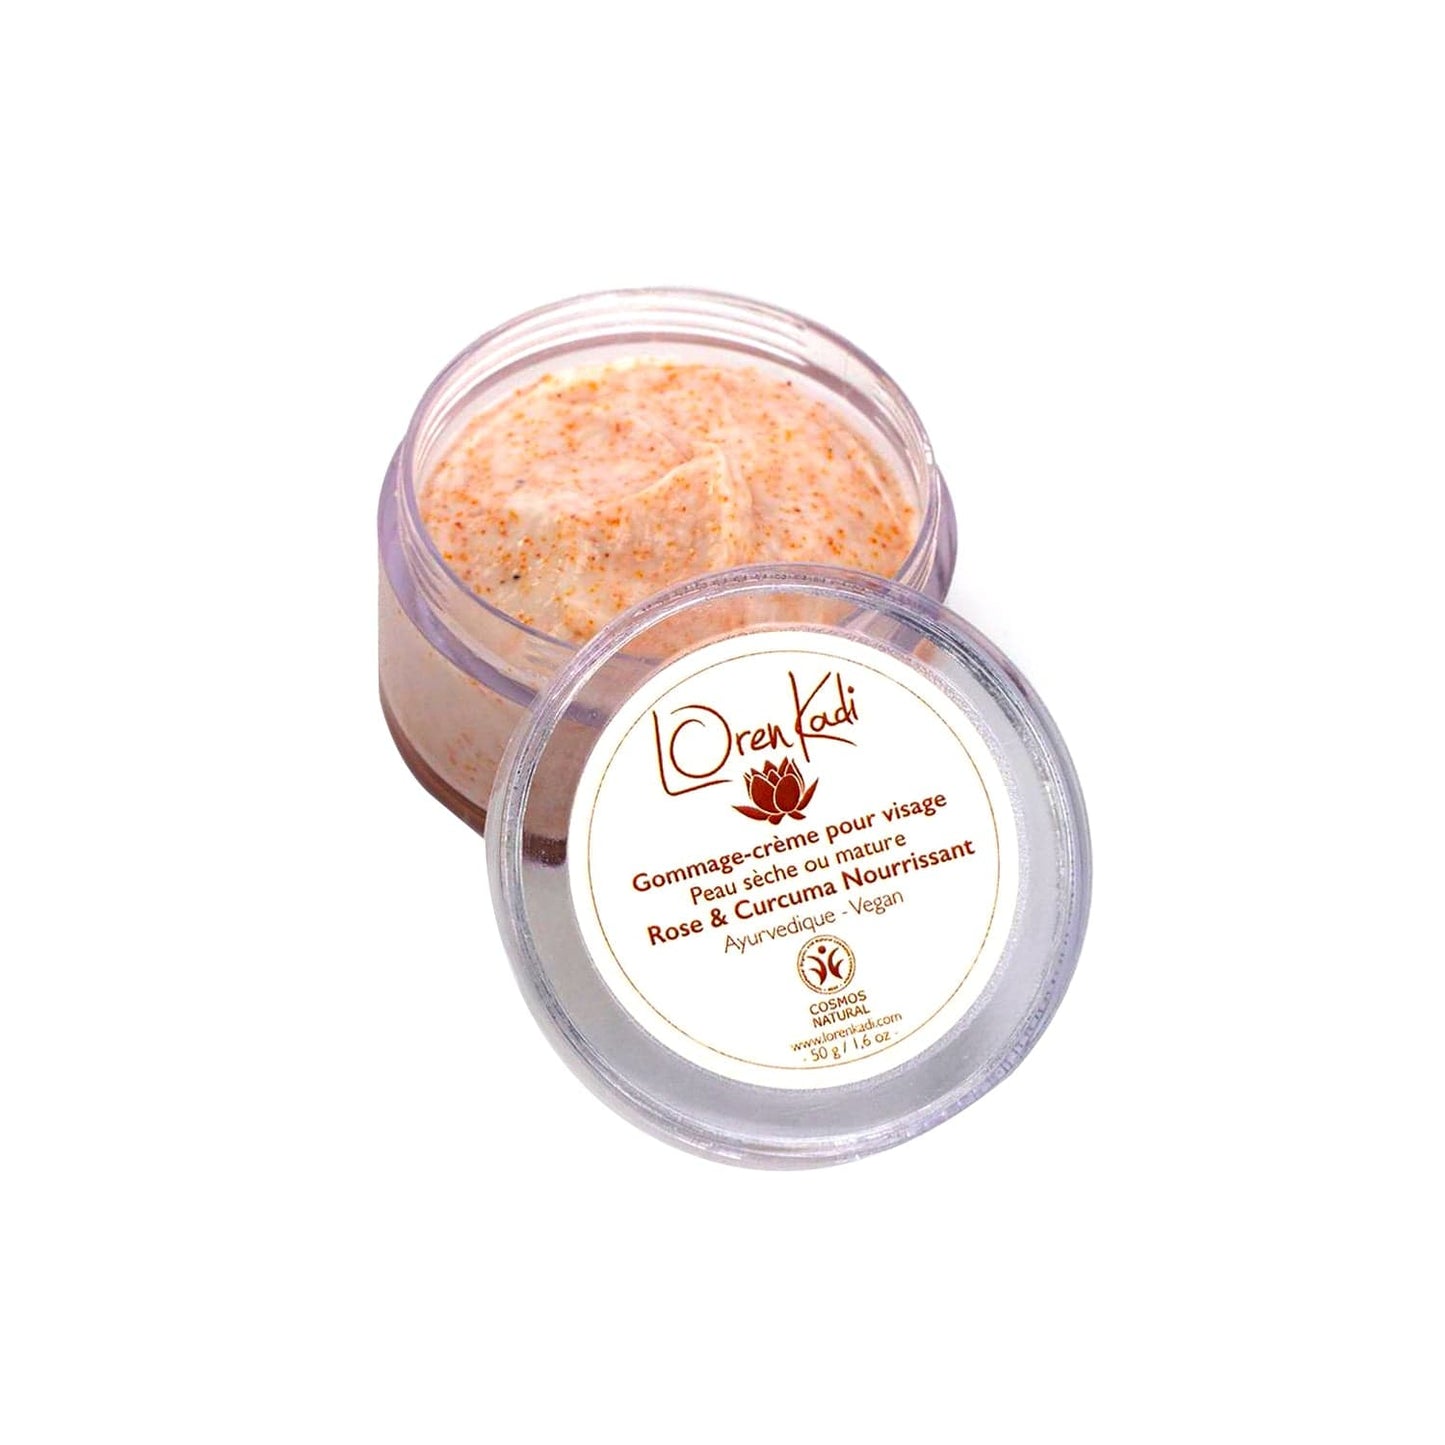 Loren Kadi -Natural scrub cream, Face Dry or mature skin "Rose-Aloe-Curcuma" Nourishing (Two sizes available) - Loren Kadi - Ethni Beauty Market